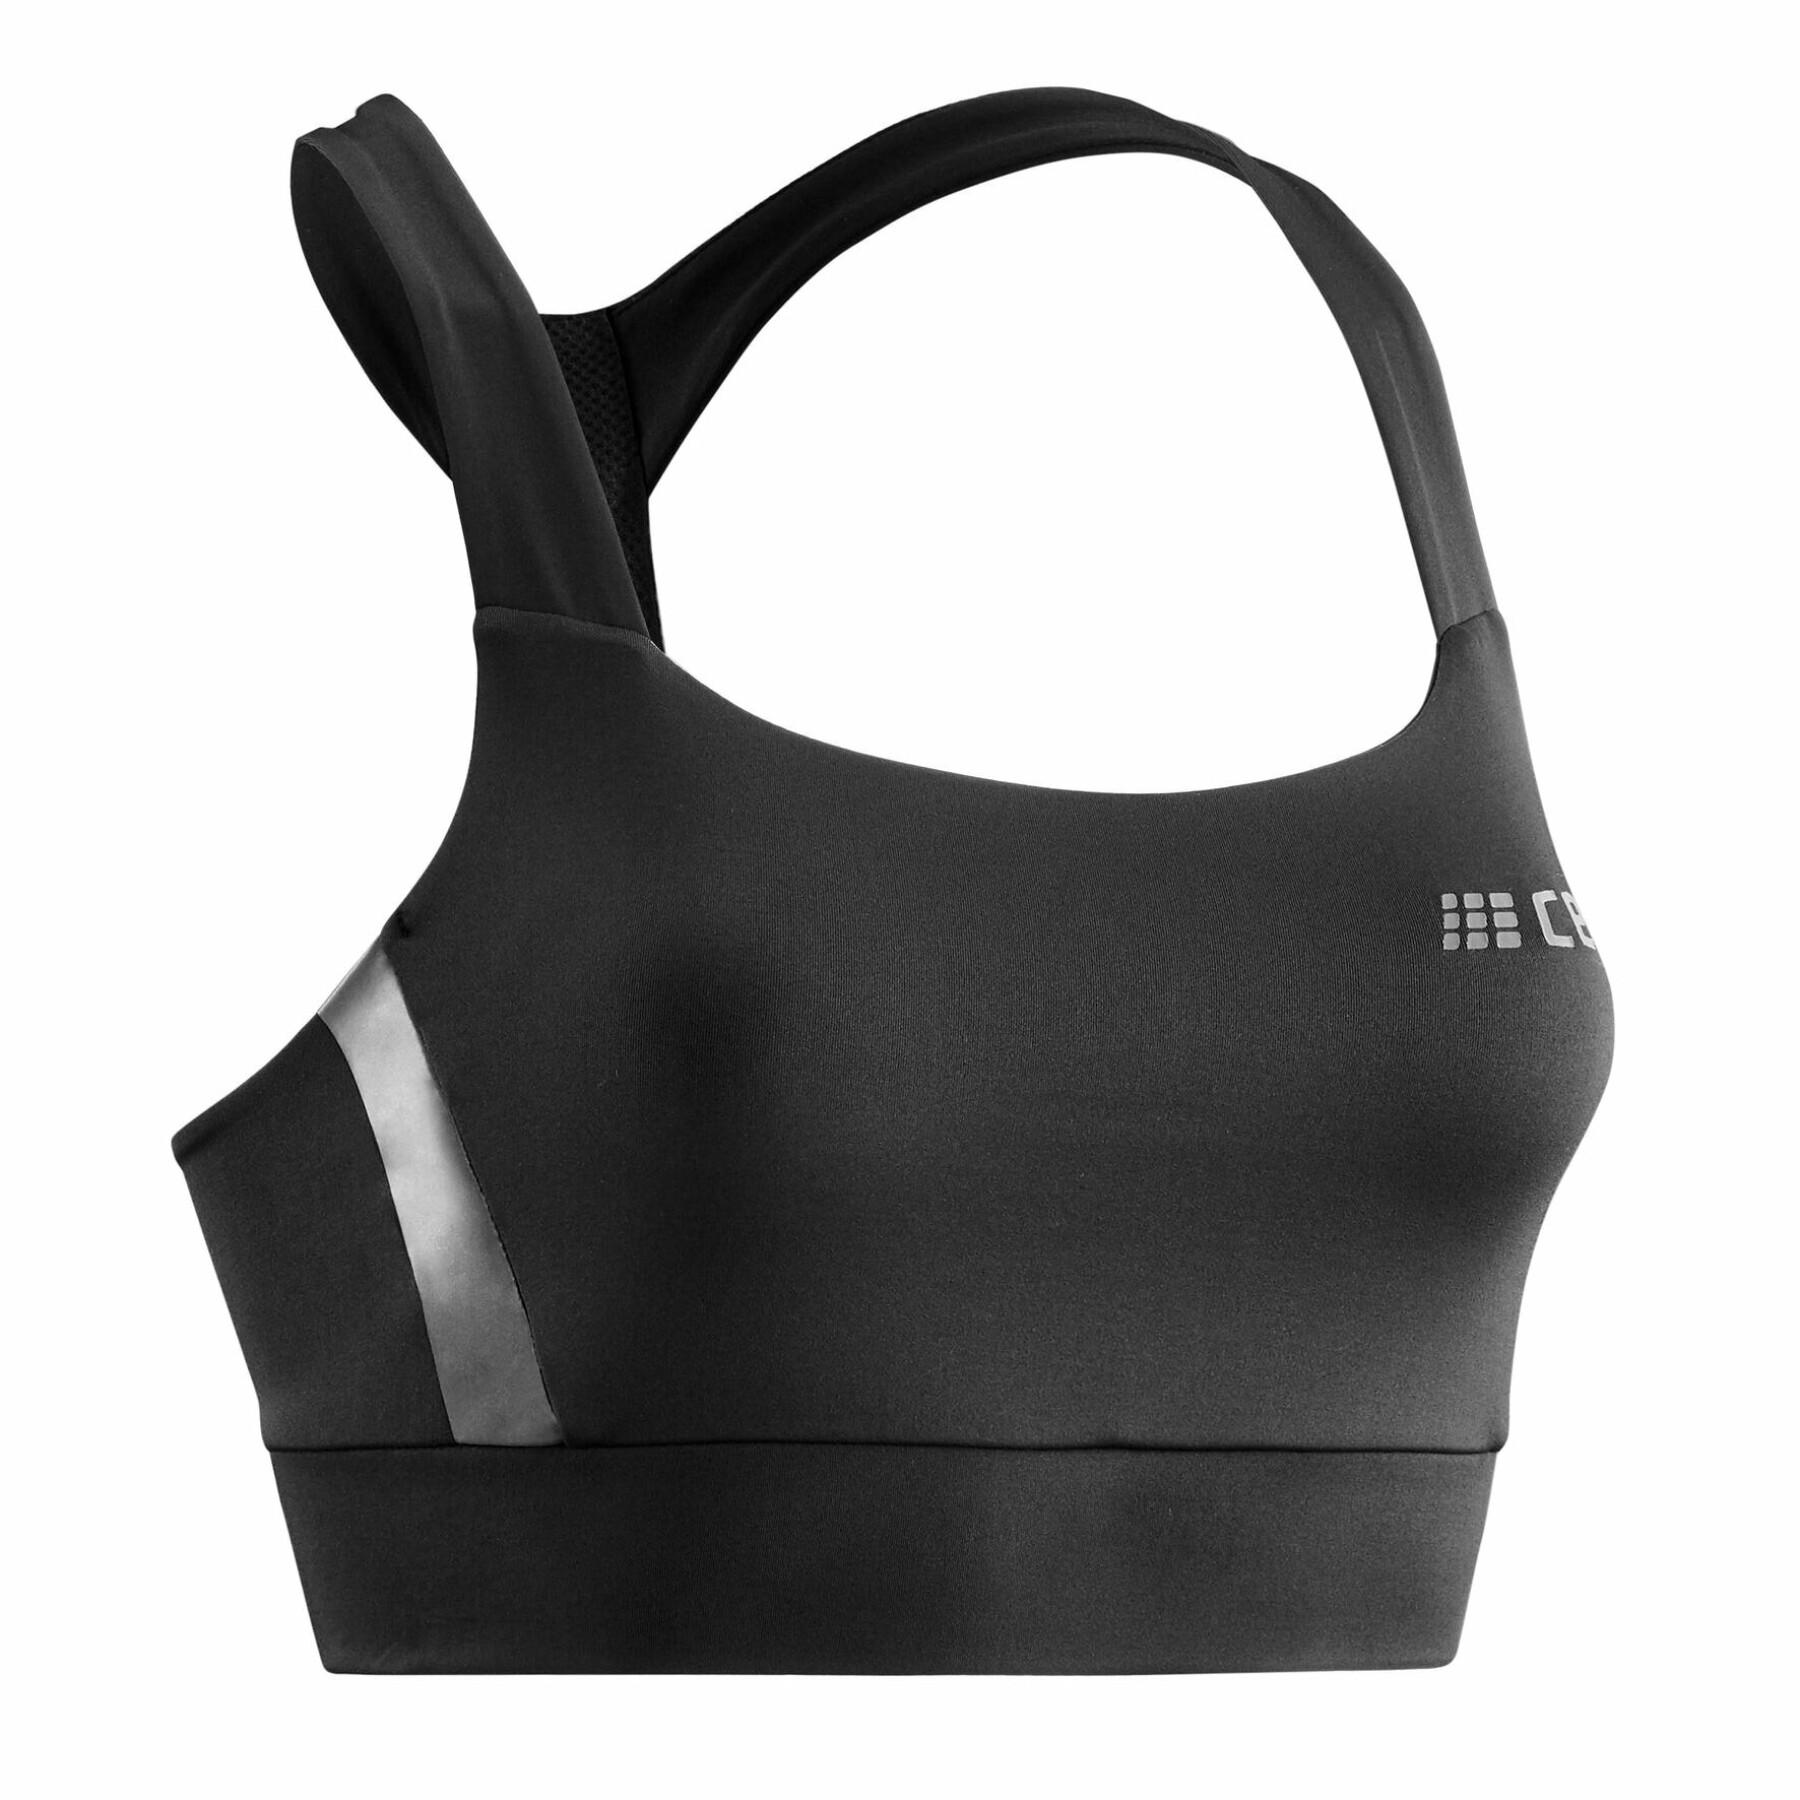 Women's bra CEP Compression Sport - Bras - Women's clothing - Fitness